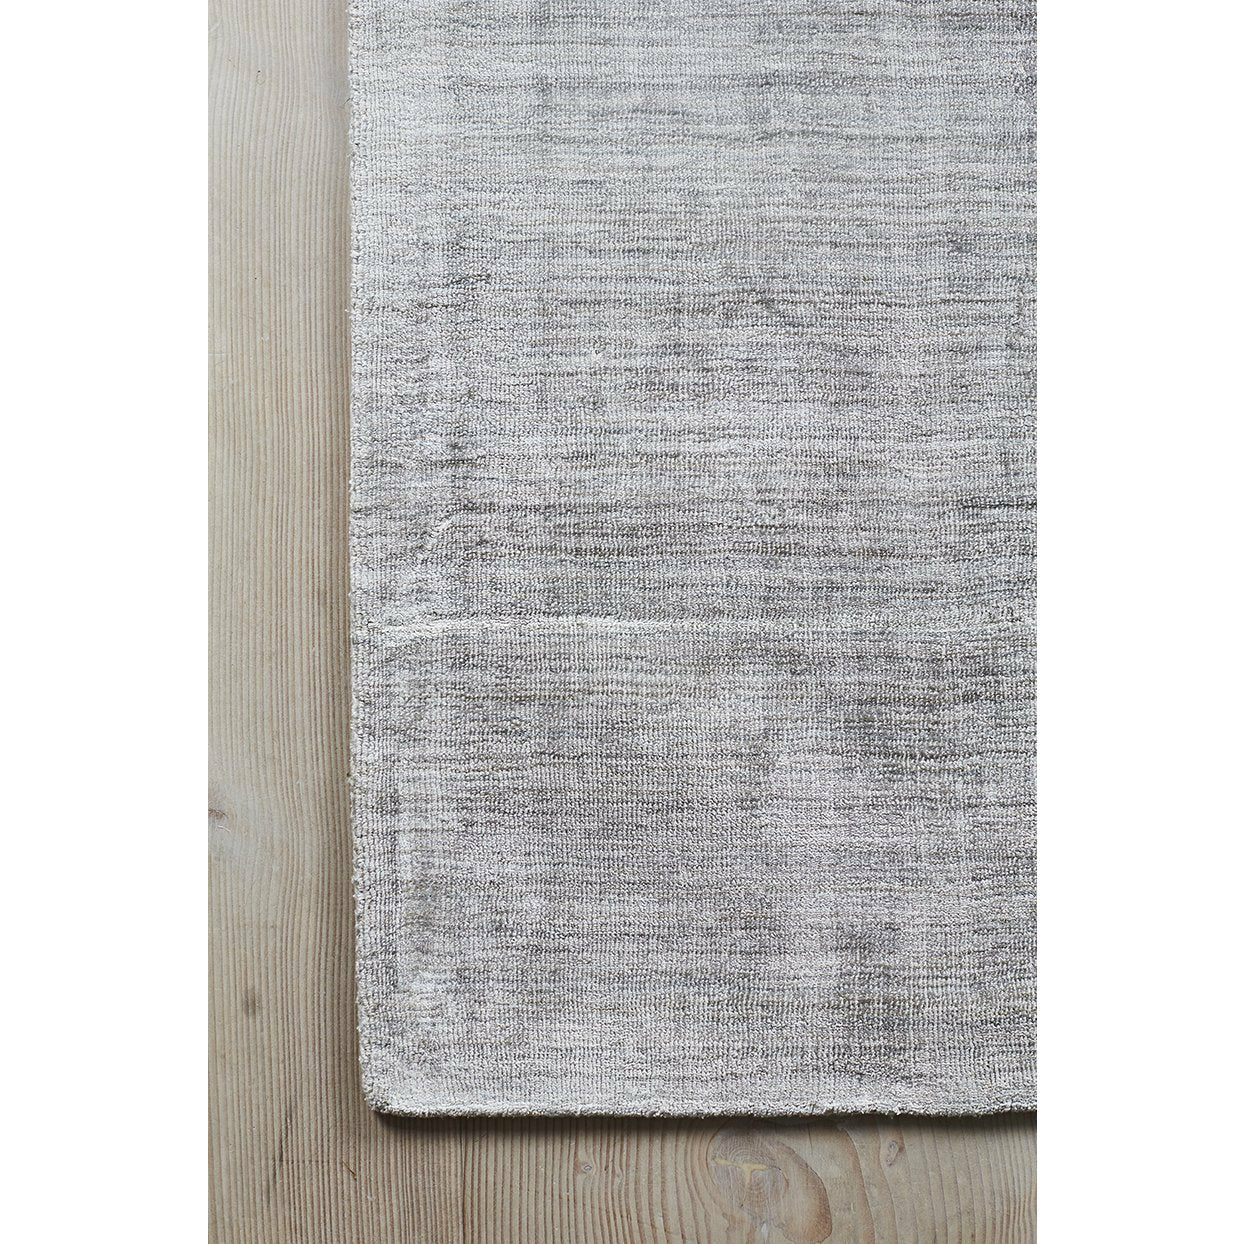 Massimo Karma tapis gris clair, 200x300 cm